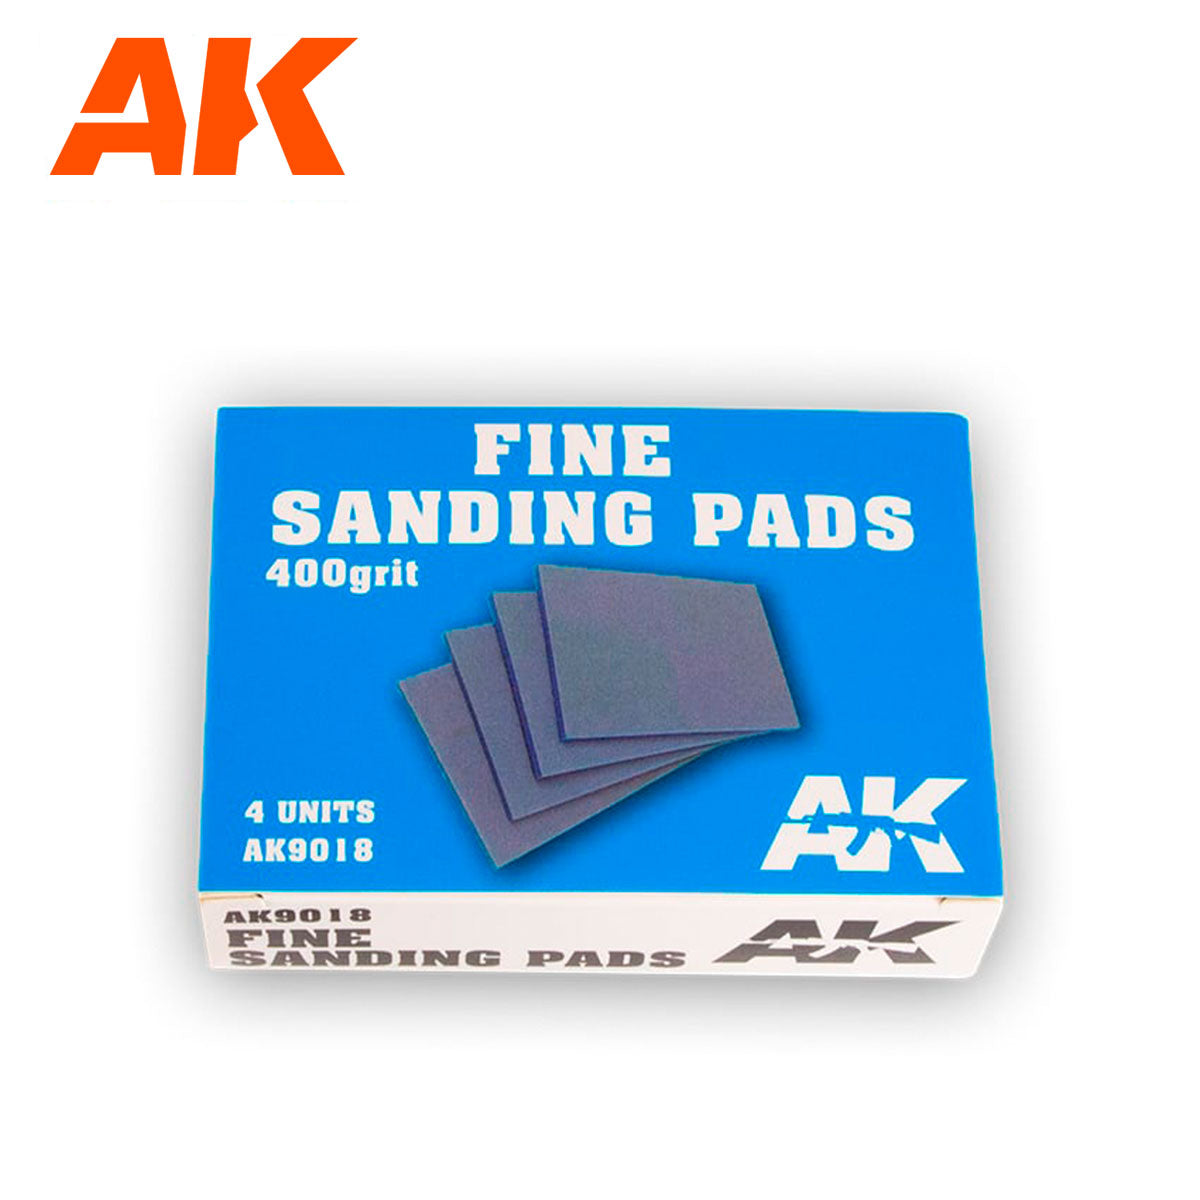 AK9018 - Fine Sanding Pads - 400 grit (4 in a pack) Blue Box